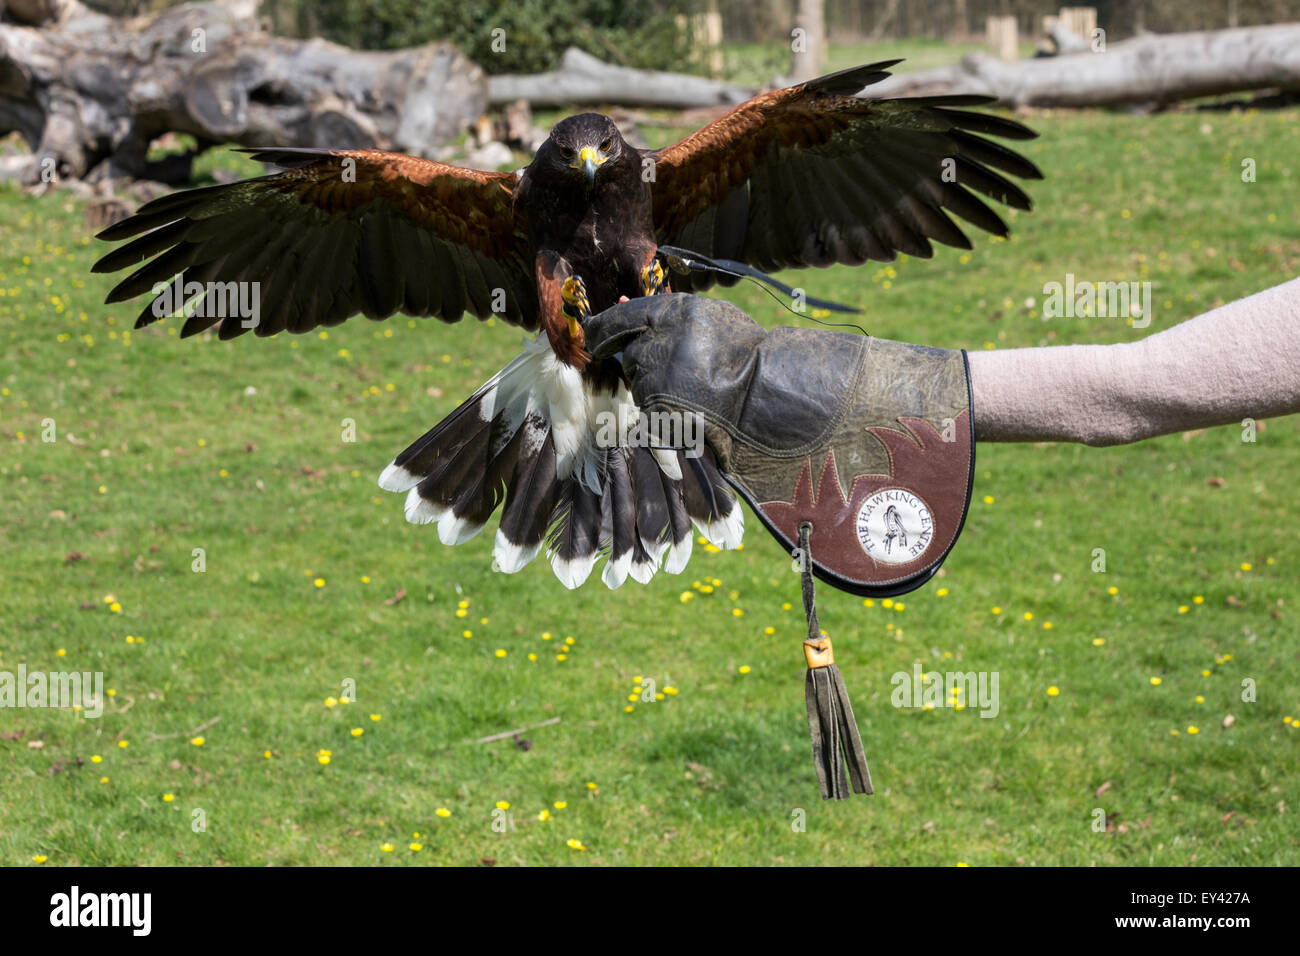 Harris's hawk or Harris Hawk (Parabuteo unicinctus), The Hawking Centre, Doddington, Kent, England, UK Stock Photo